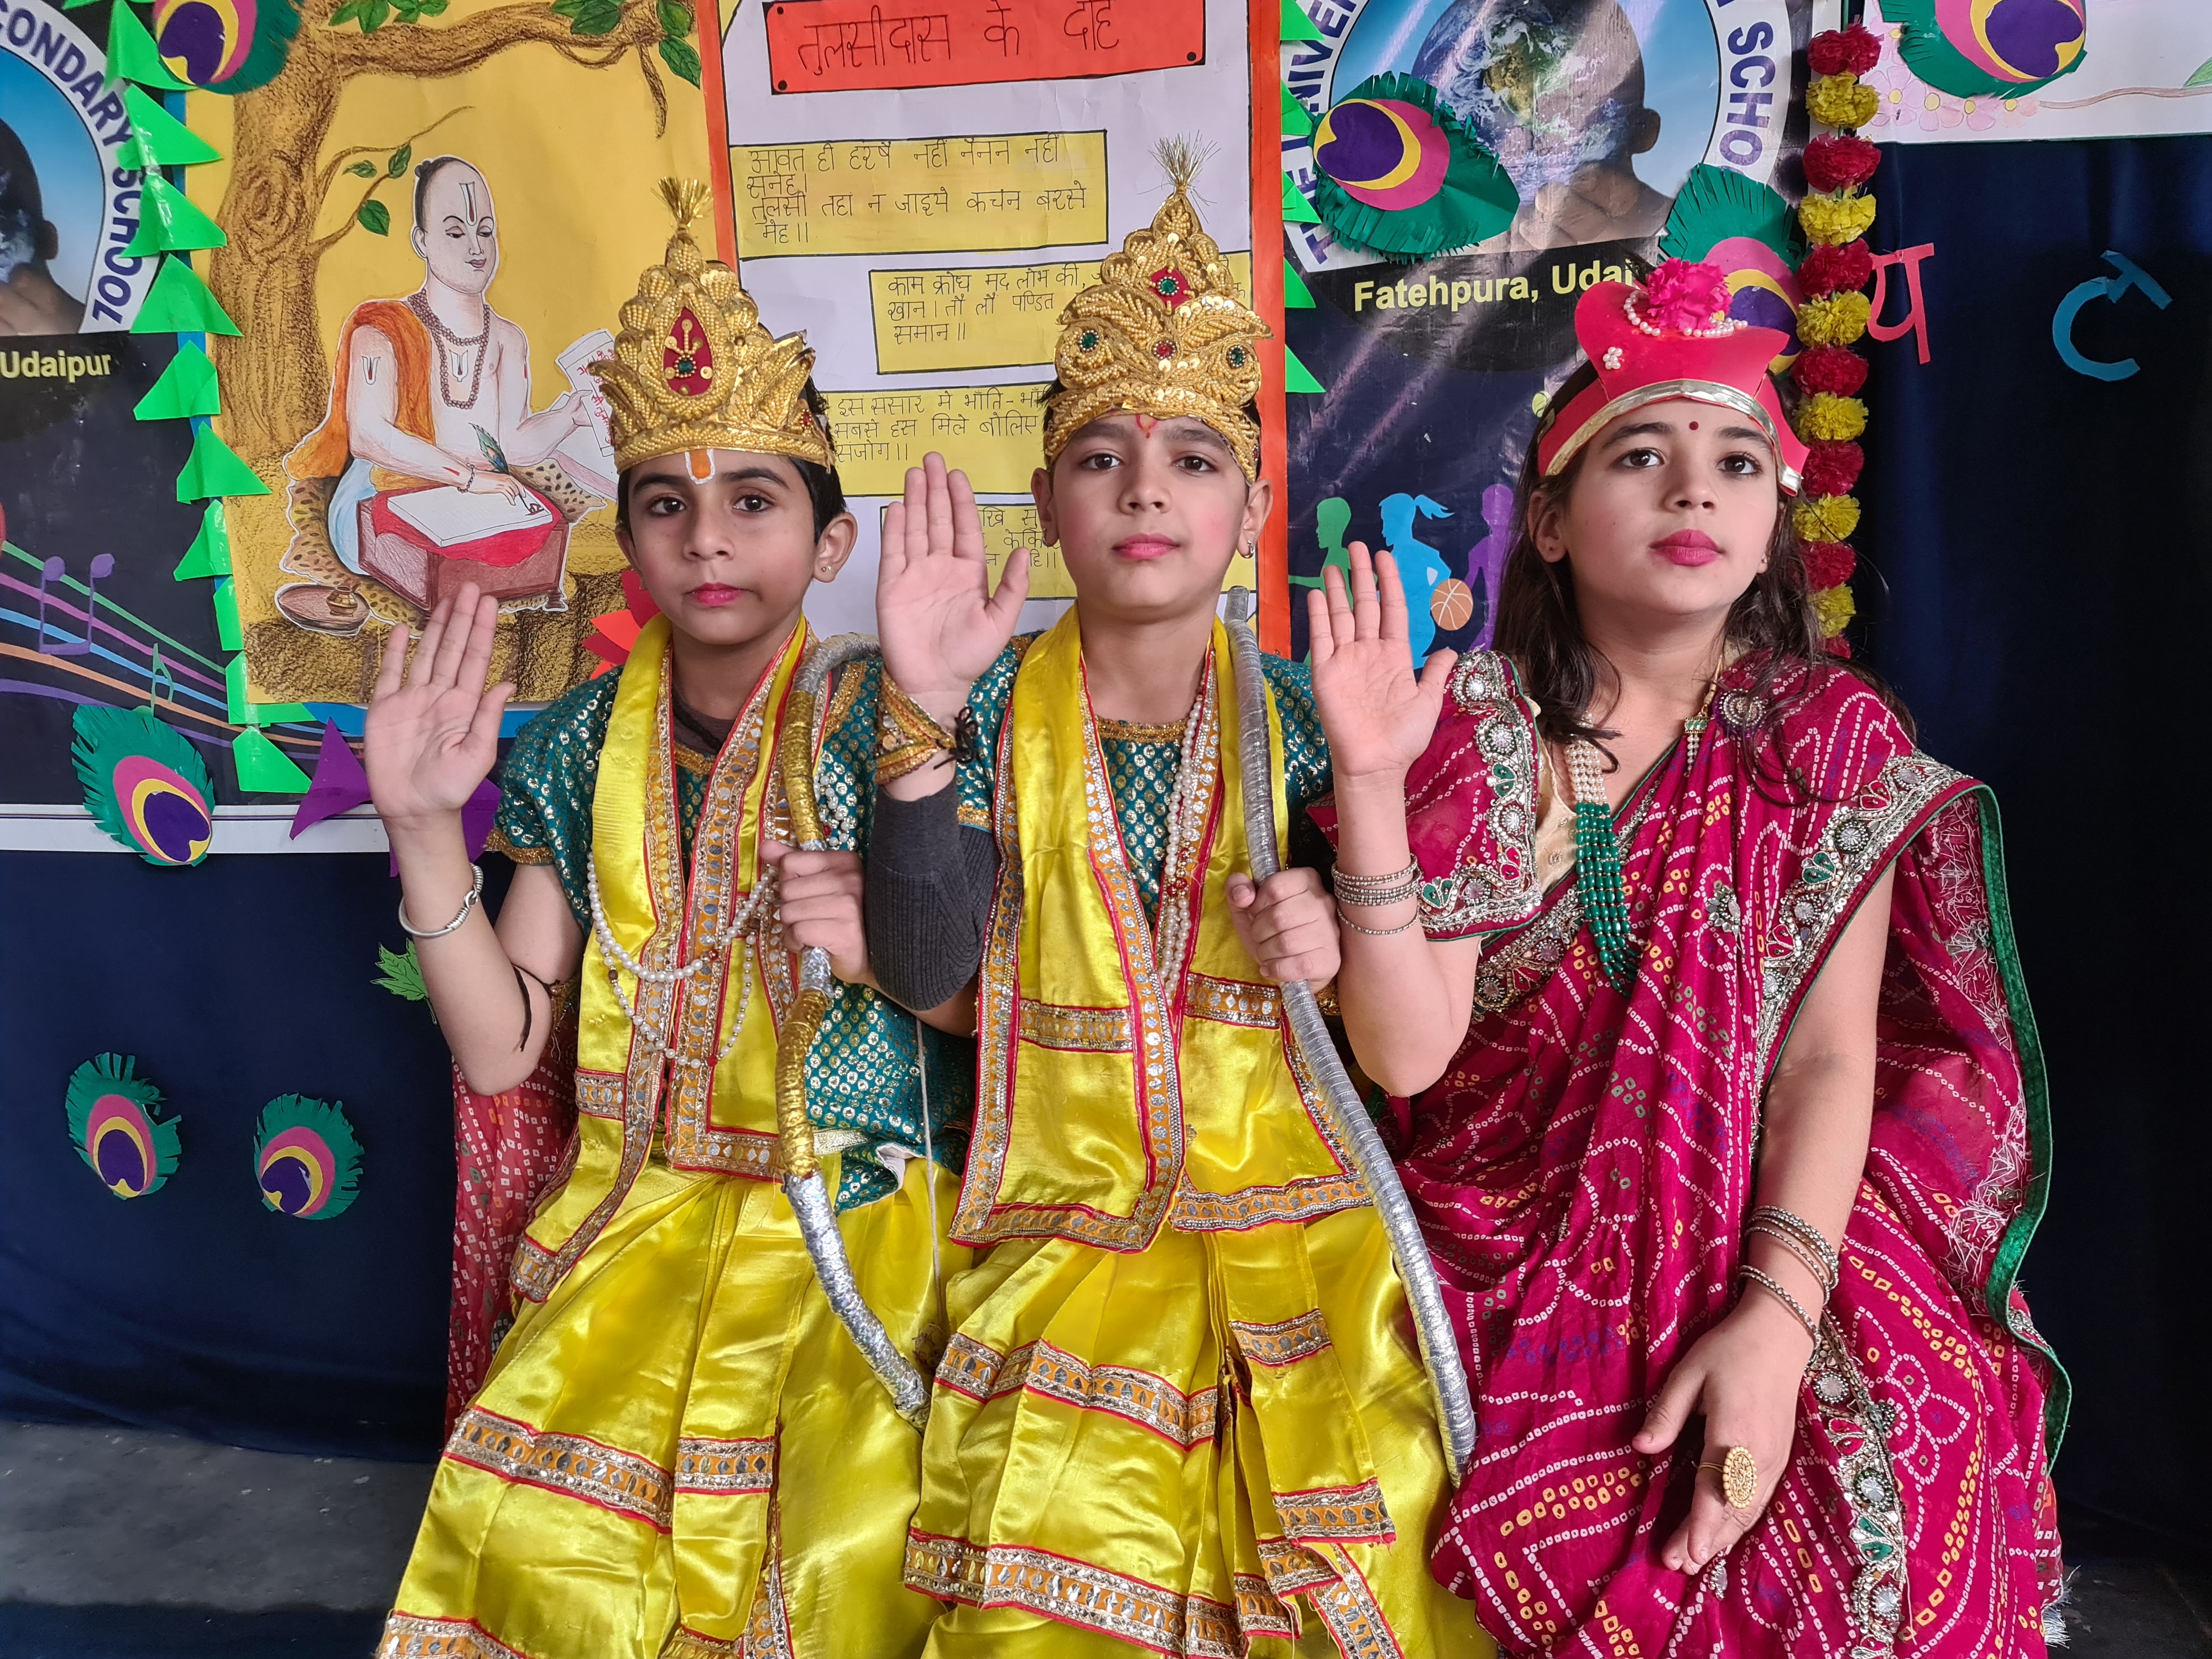 Universal Education Carnival Hosts 'Kaun Banega Crorepati' Program